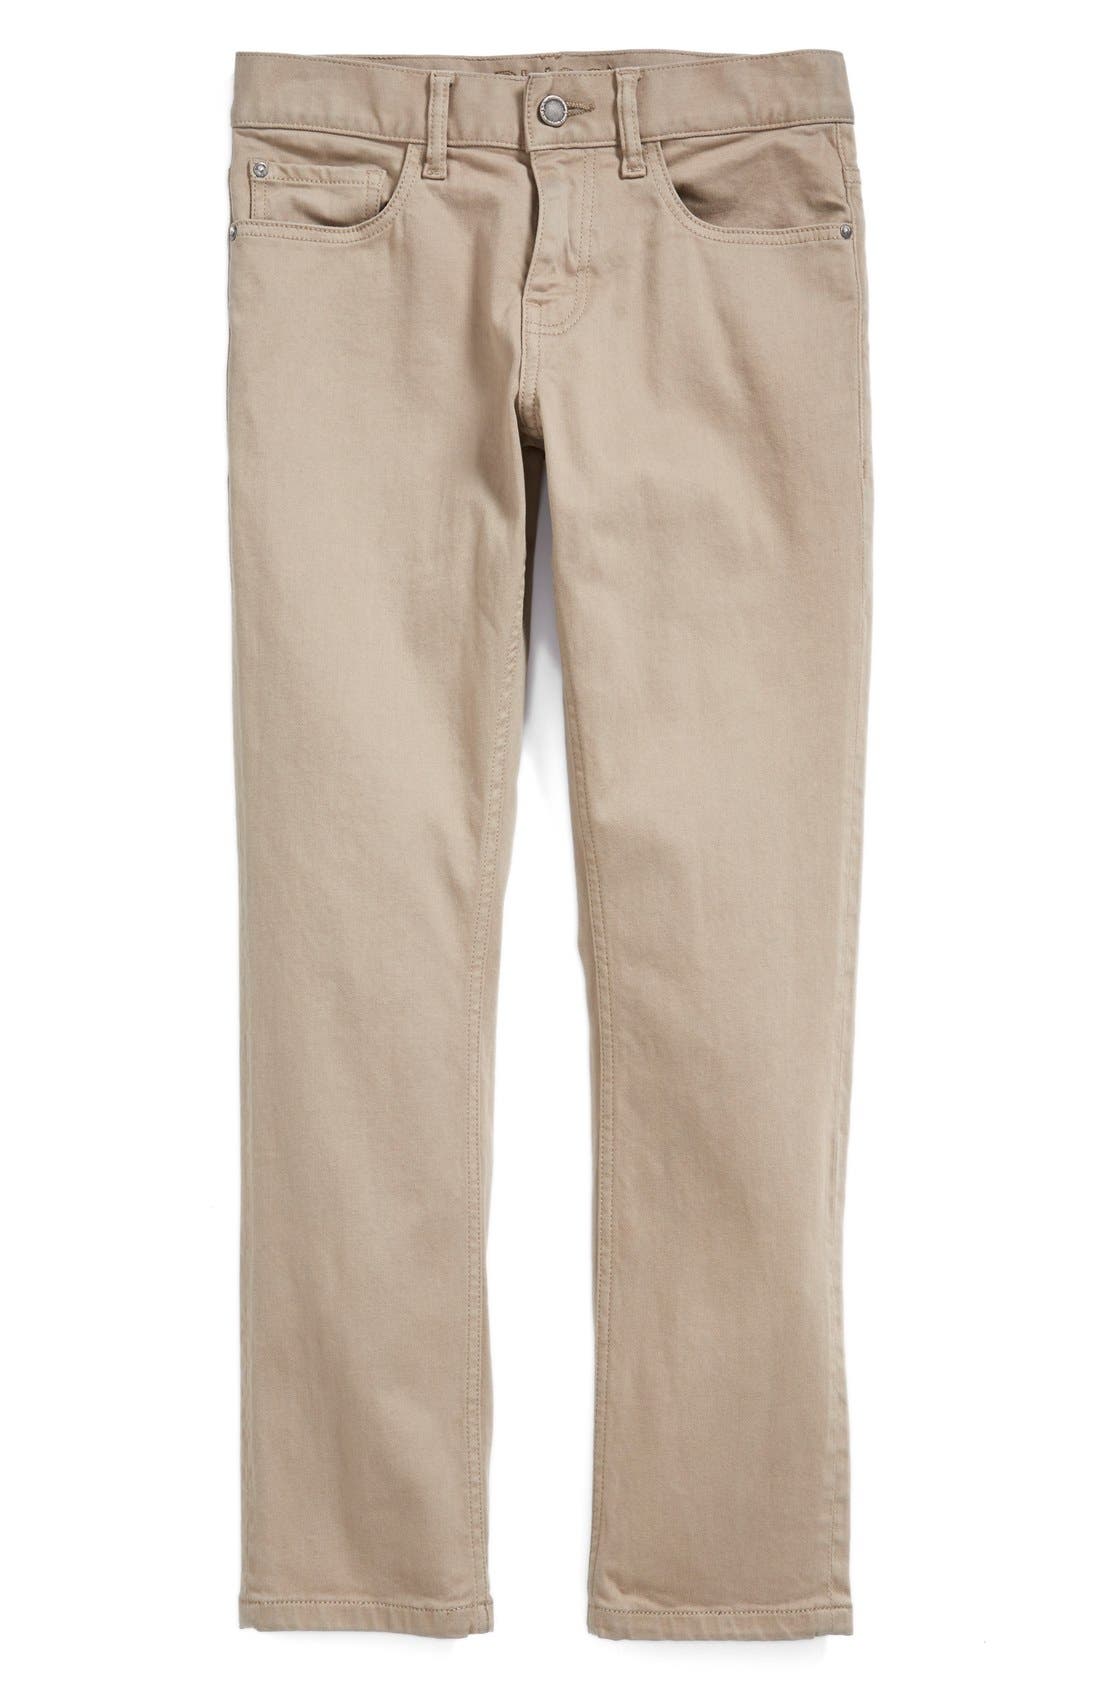 Little Boys & Boys Brady Slim-Leg Pants Saks Fifth Avenue Boys Clothing Pants Skinny Pants 